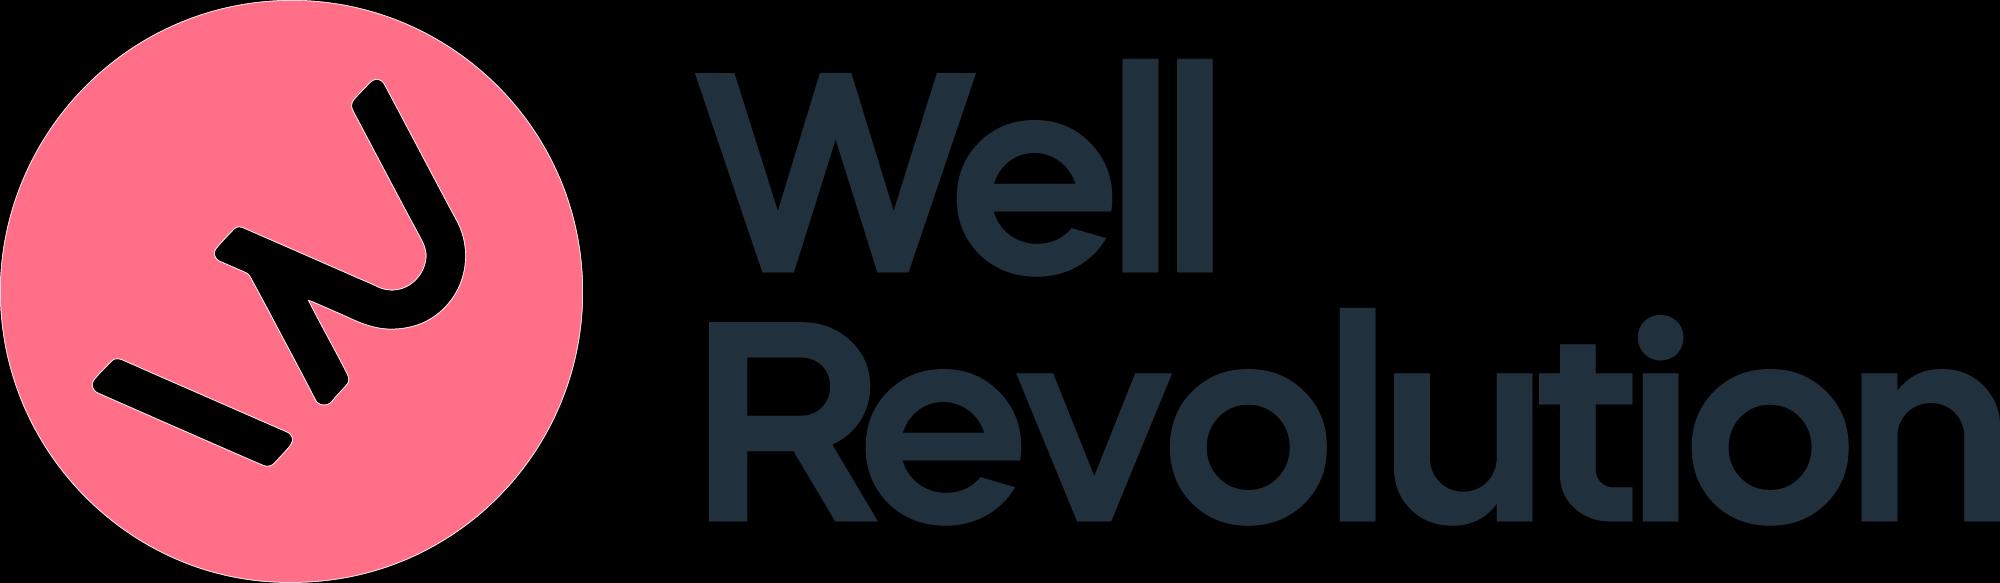 Well Revolution_logo